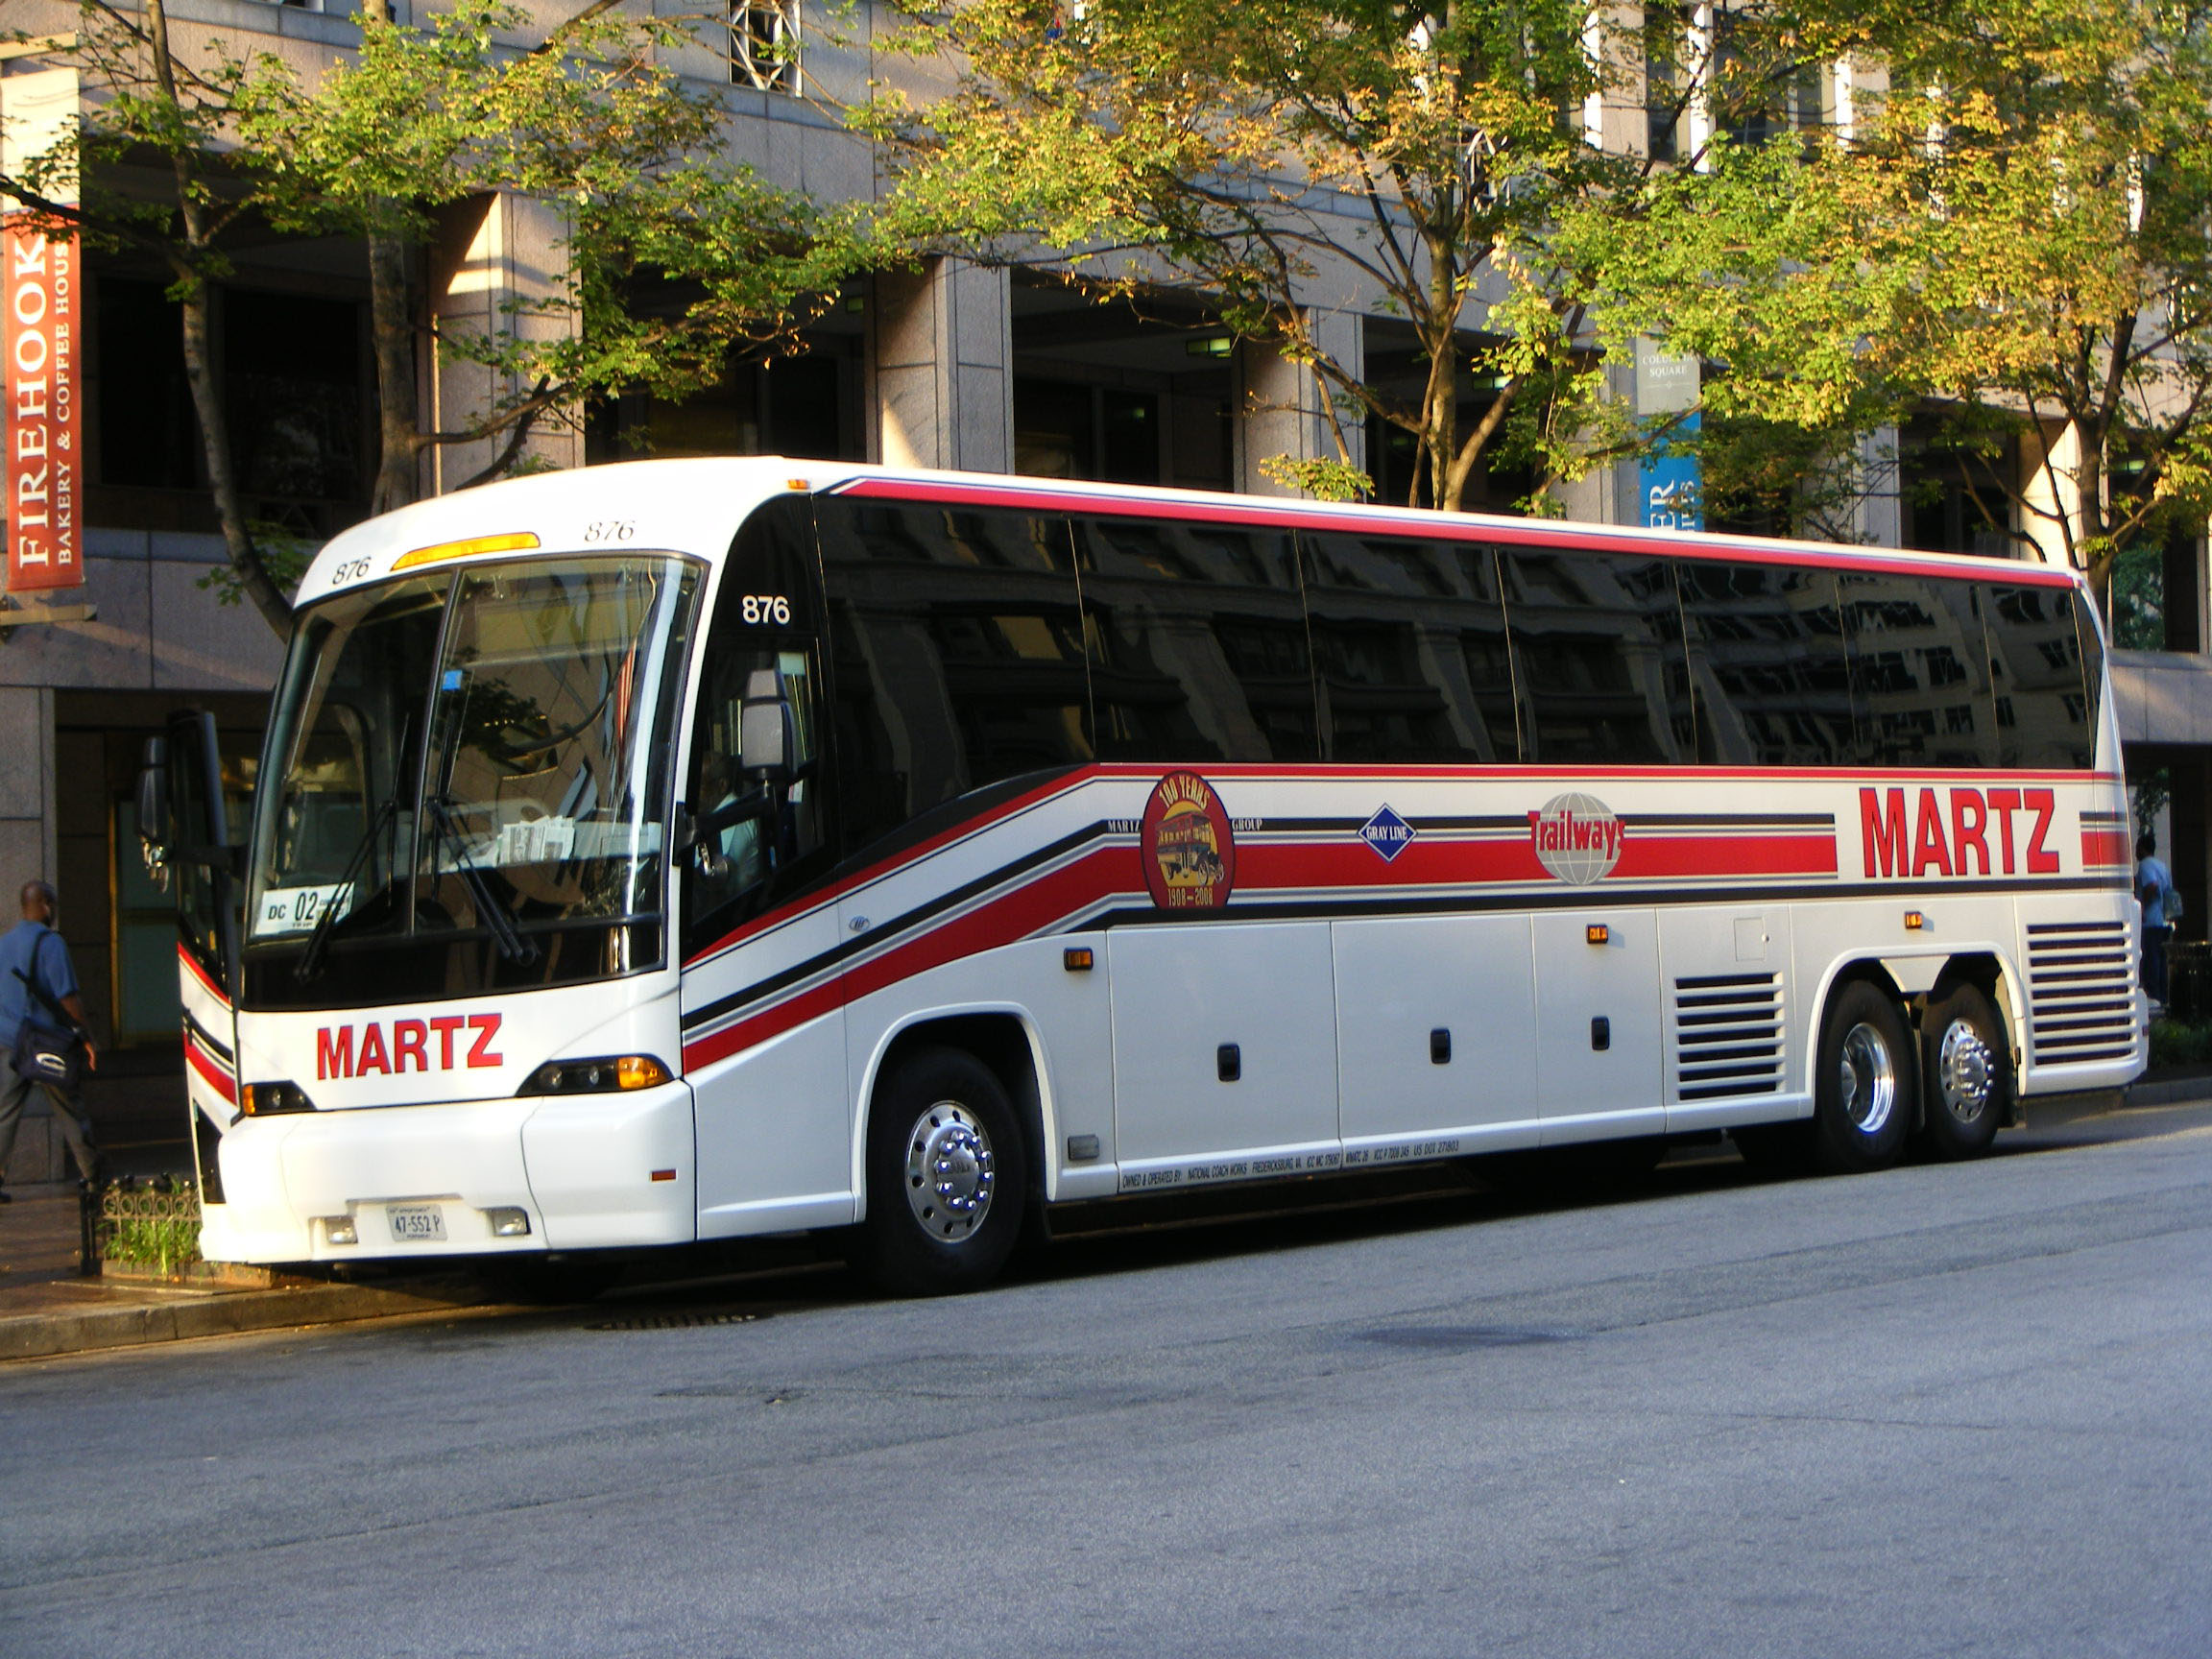 martz bus excursions